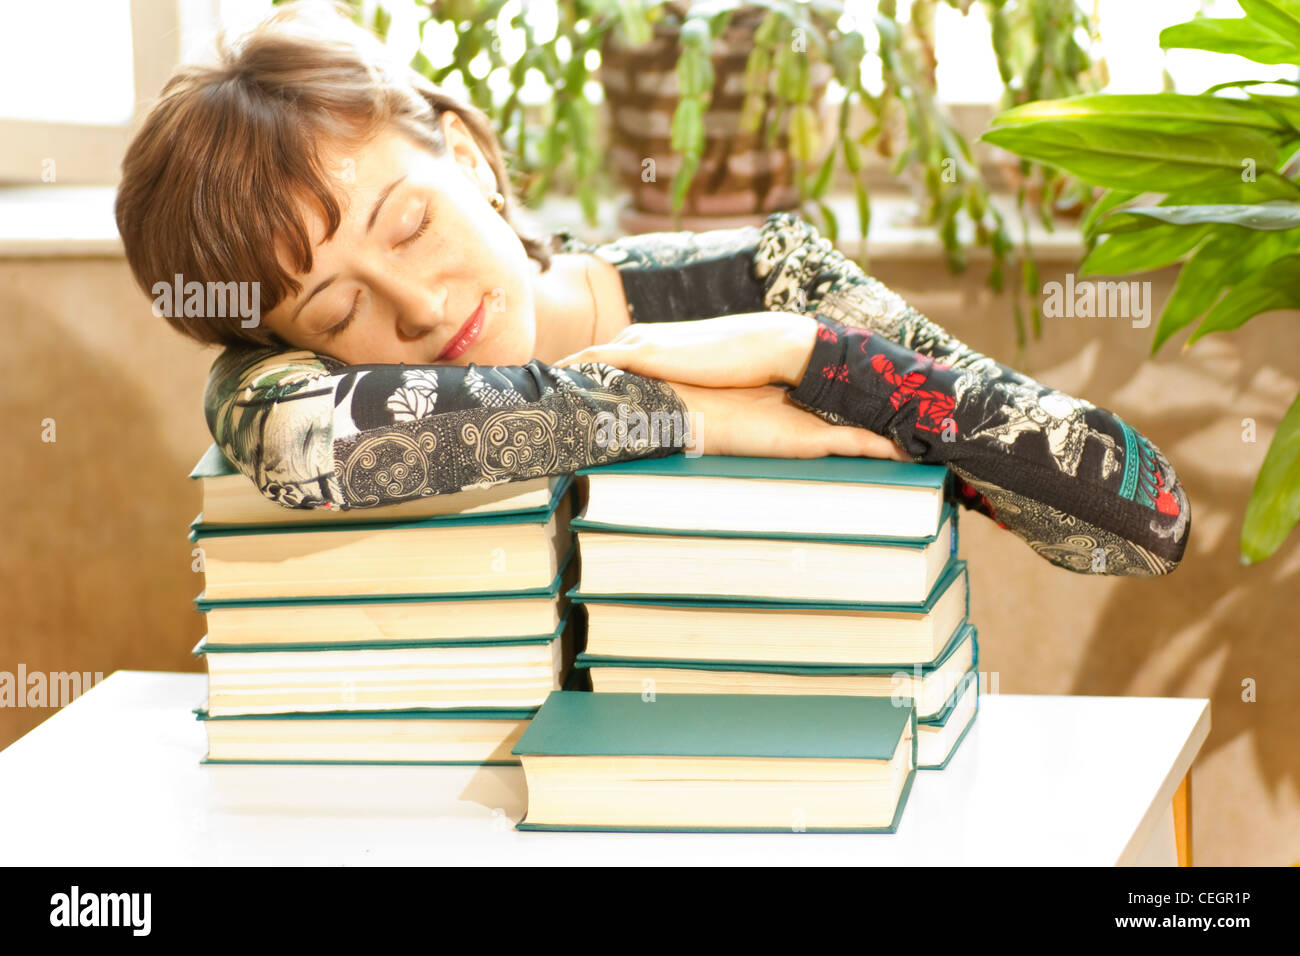 Woman sleeps while she books Stock Photo